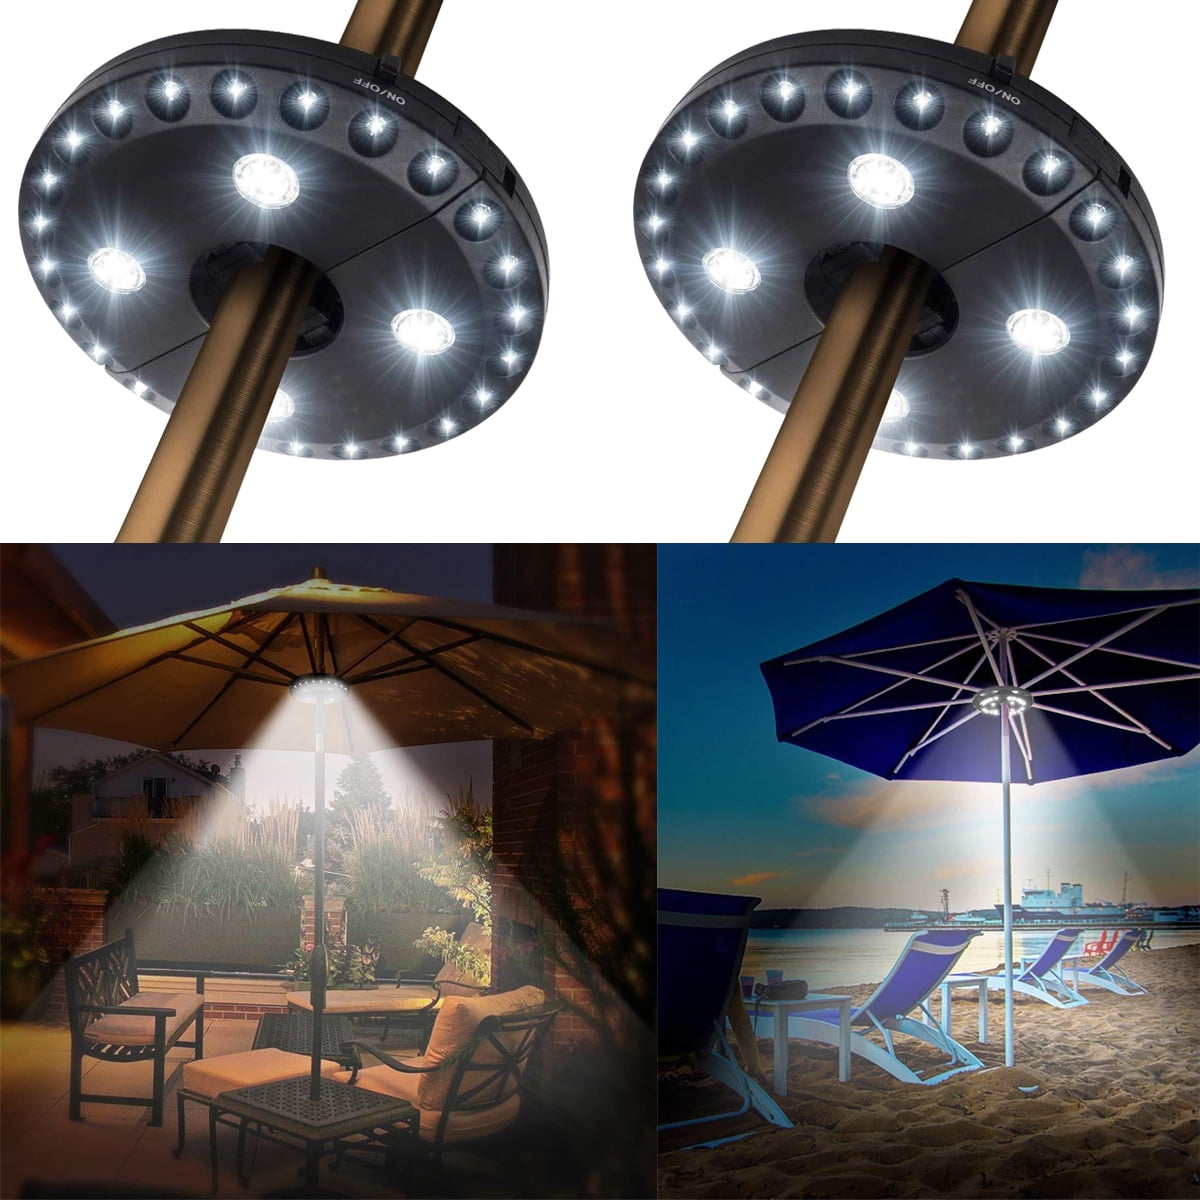 28LED Parasol Patio Umbrella Light 3 Brightness Modes Camping Outdoor Tent Light 